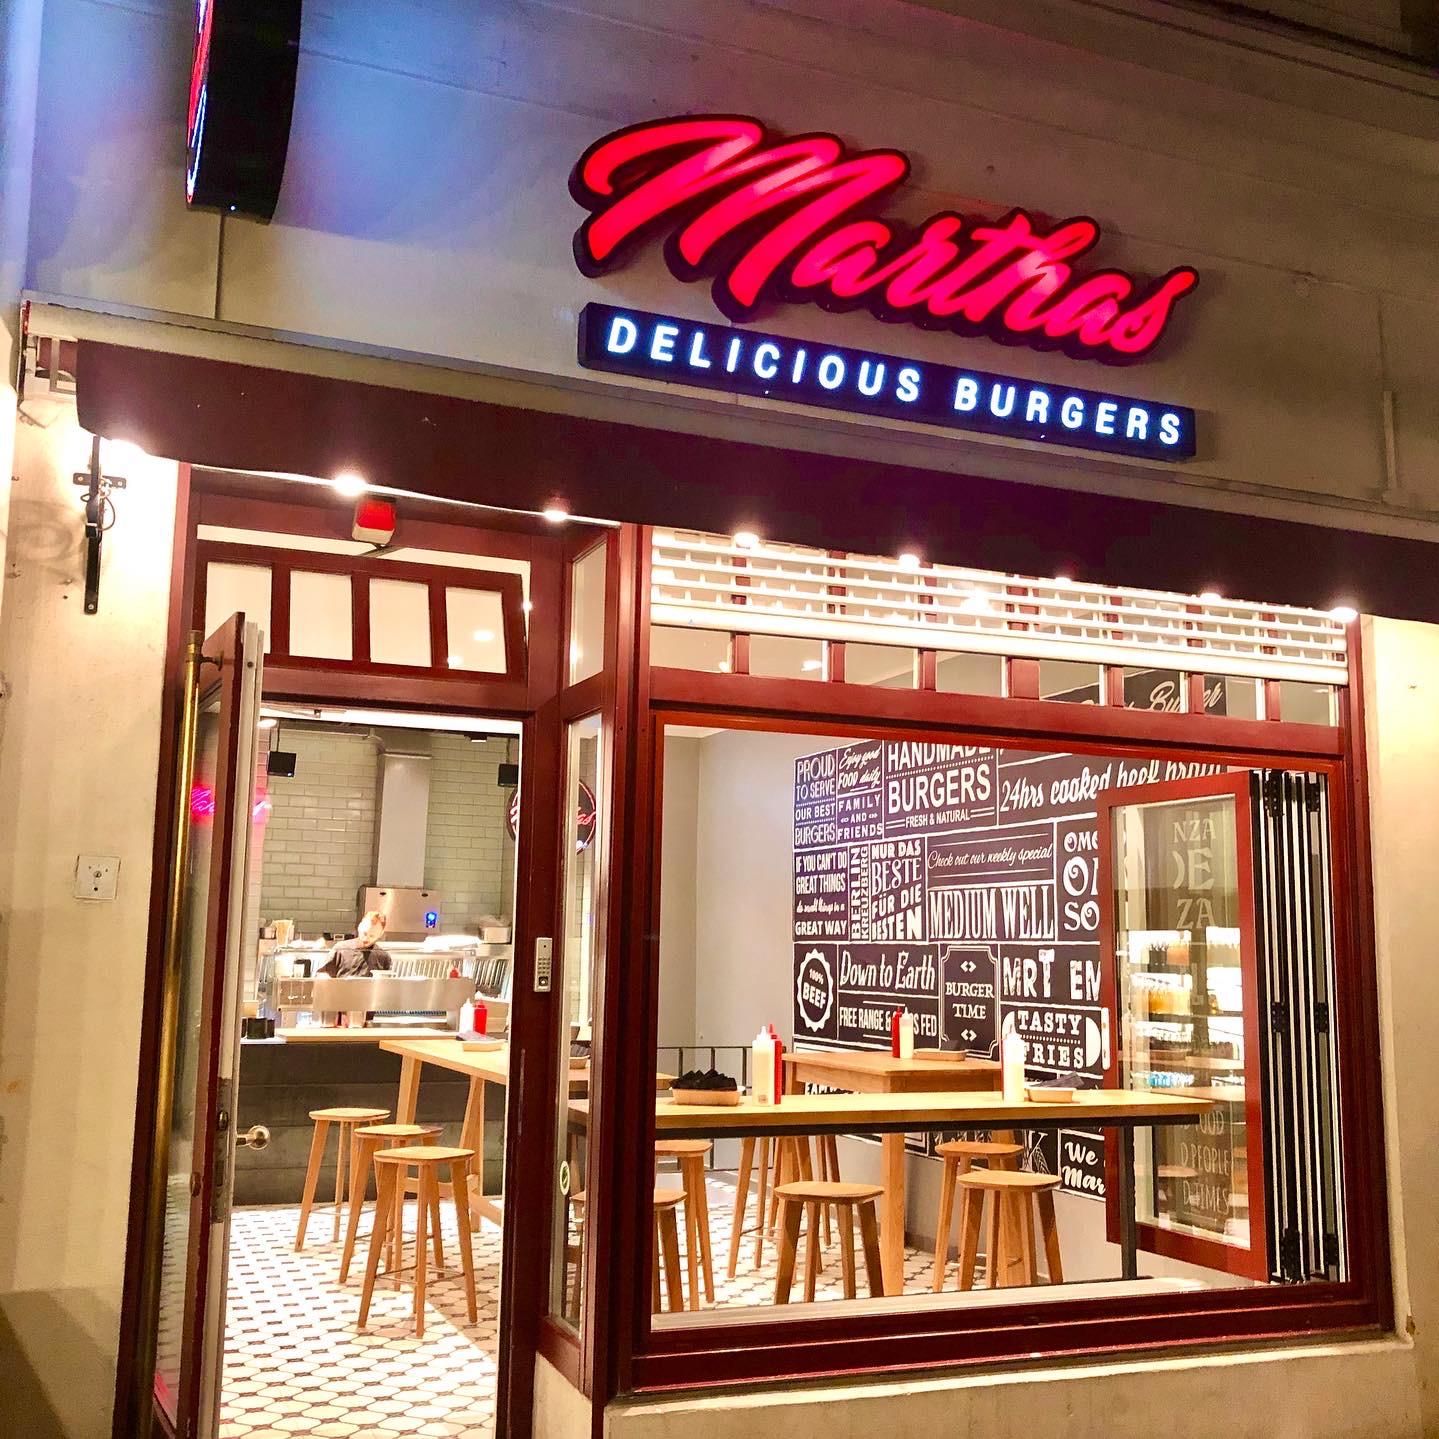 Restaurant "Marthas Delicious Burgers" in Berlin